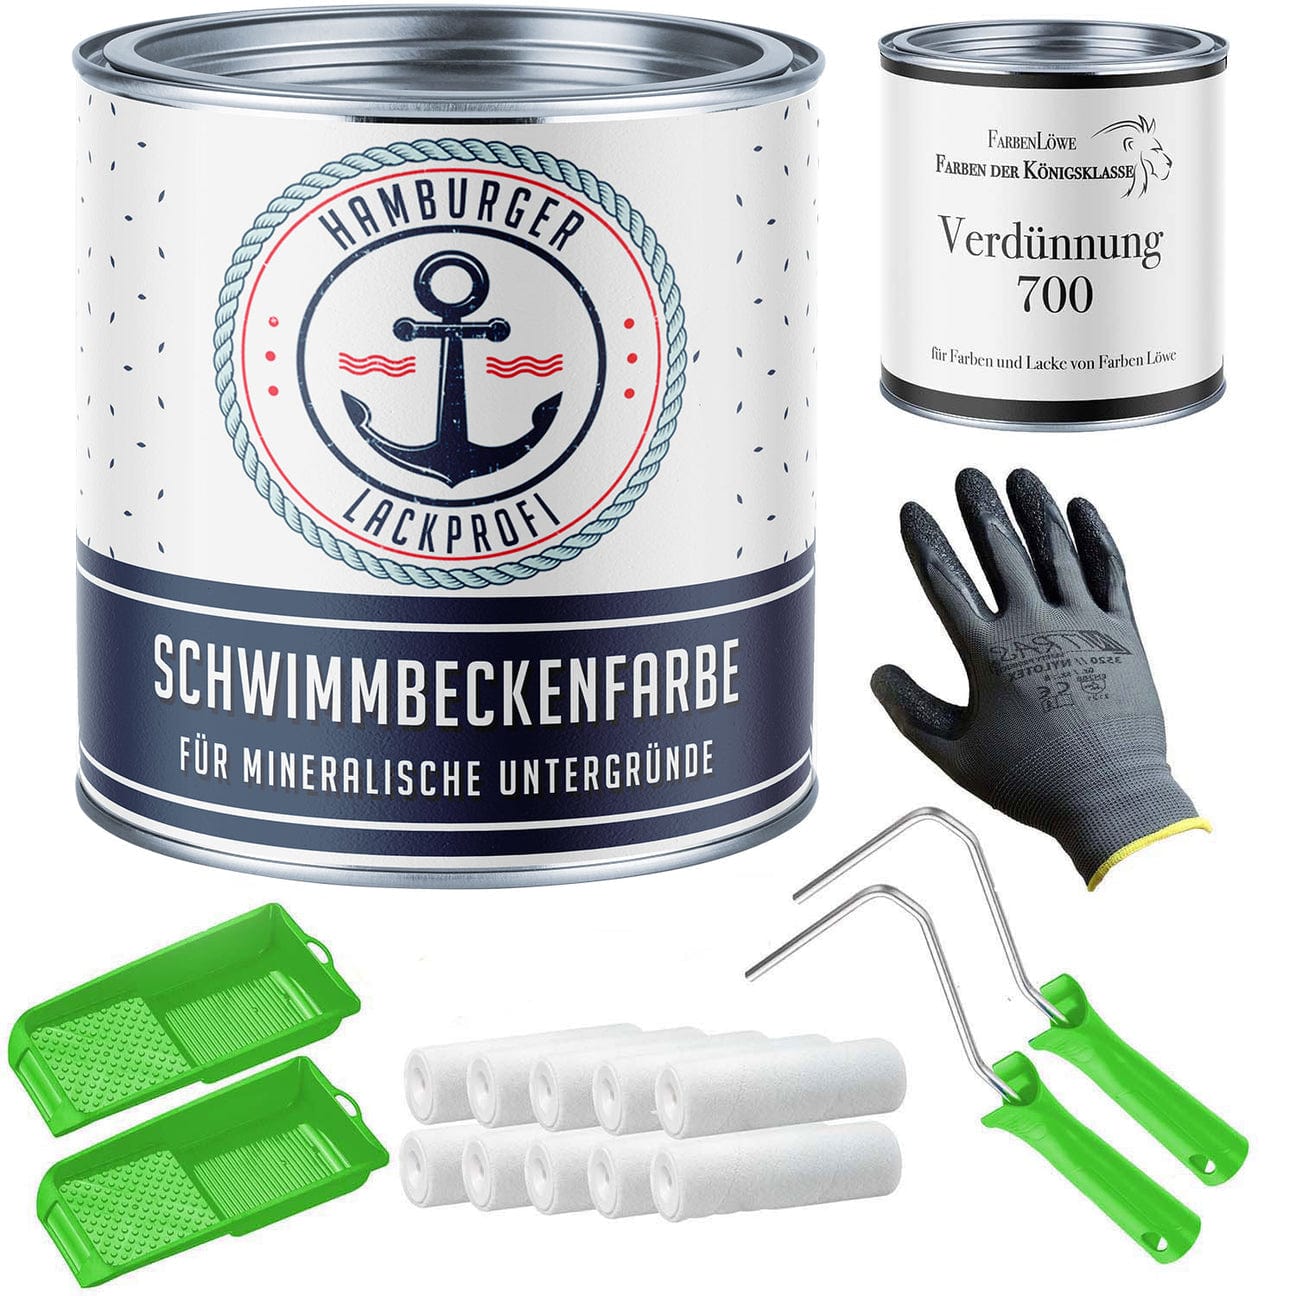 Hamburger Lack-Profi Lacke & Beschichtungen Hamburger Lack-Profi Schwimmbeckenfarbe Poolfarbe in Chromoxidgrün RAL 6020 mit Lackierset (X300) & Verdünnung (1 L) - 30% Sparangebot